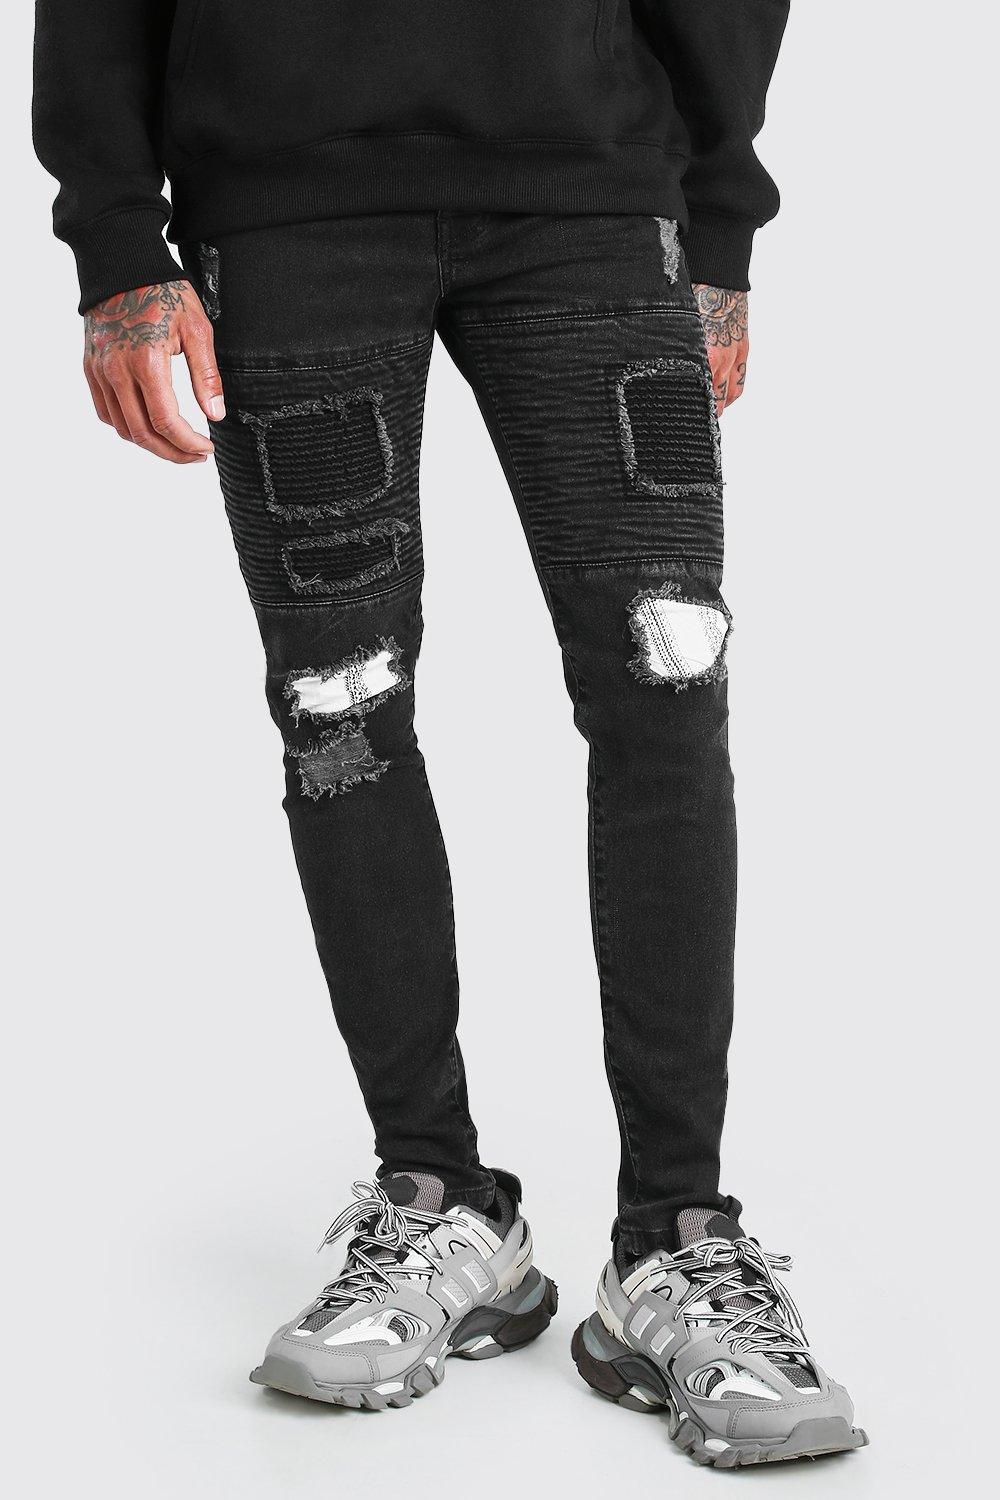 super skinny biker jeans